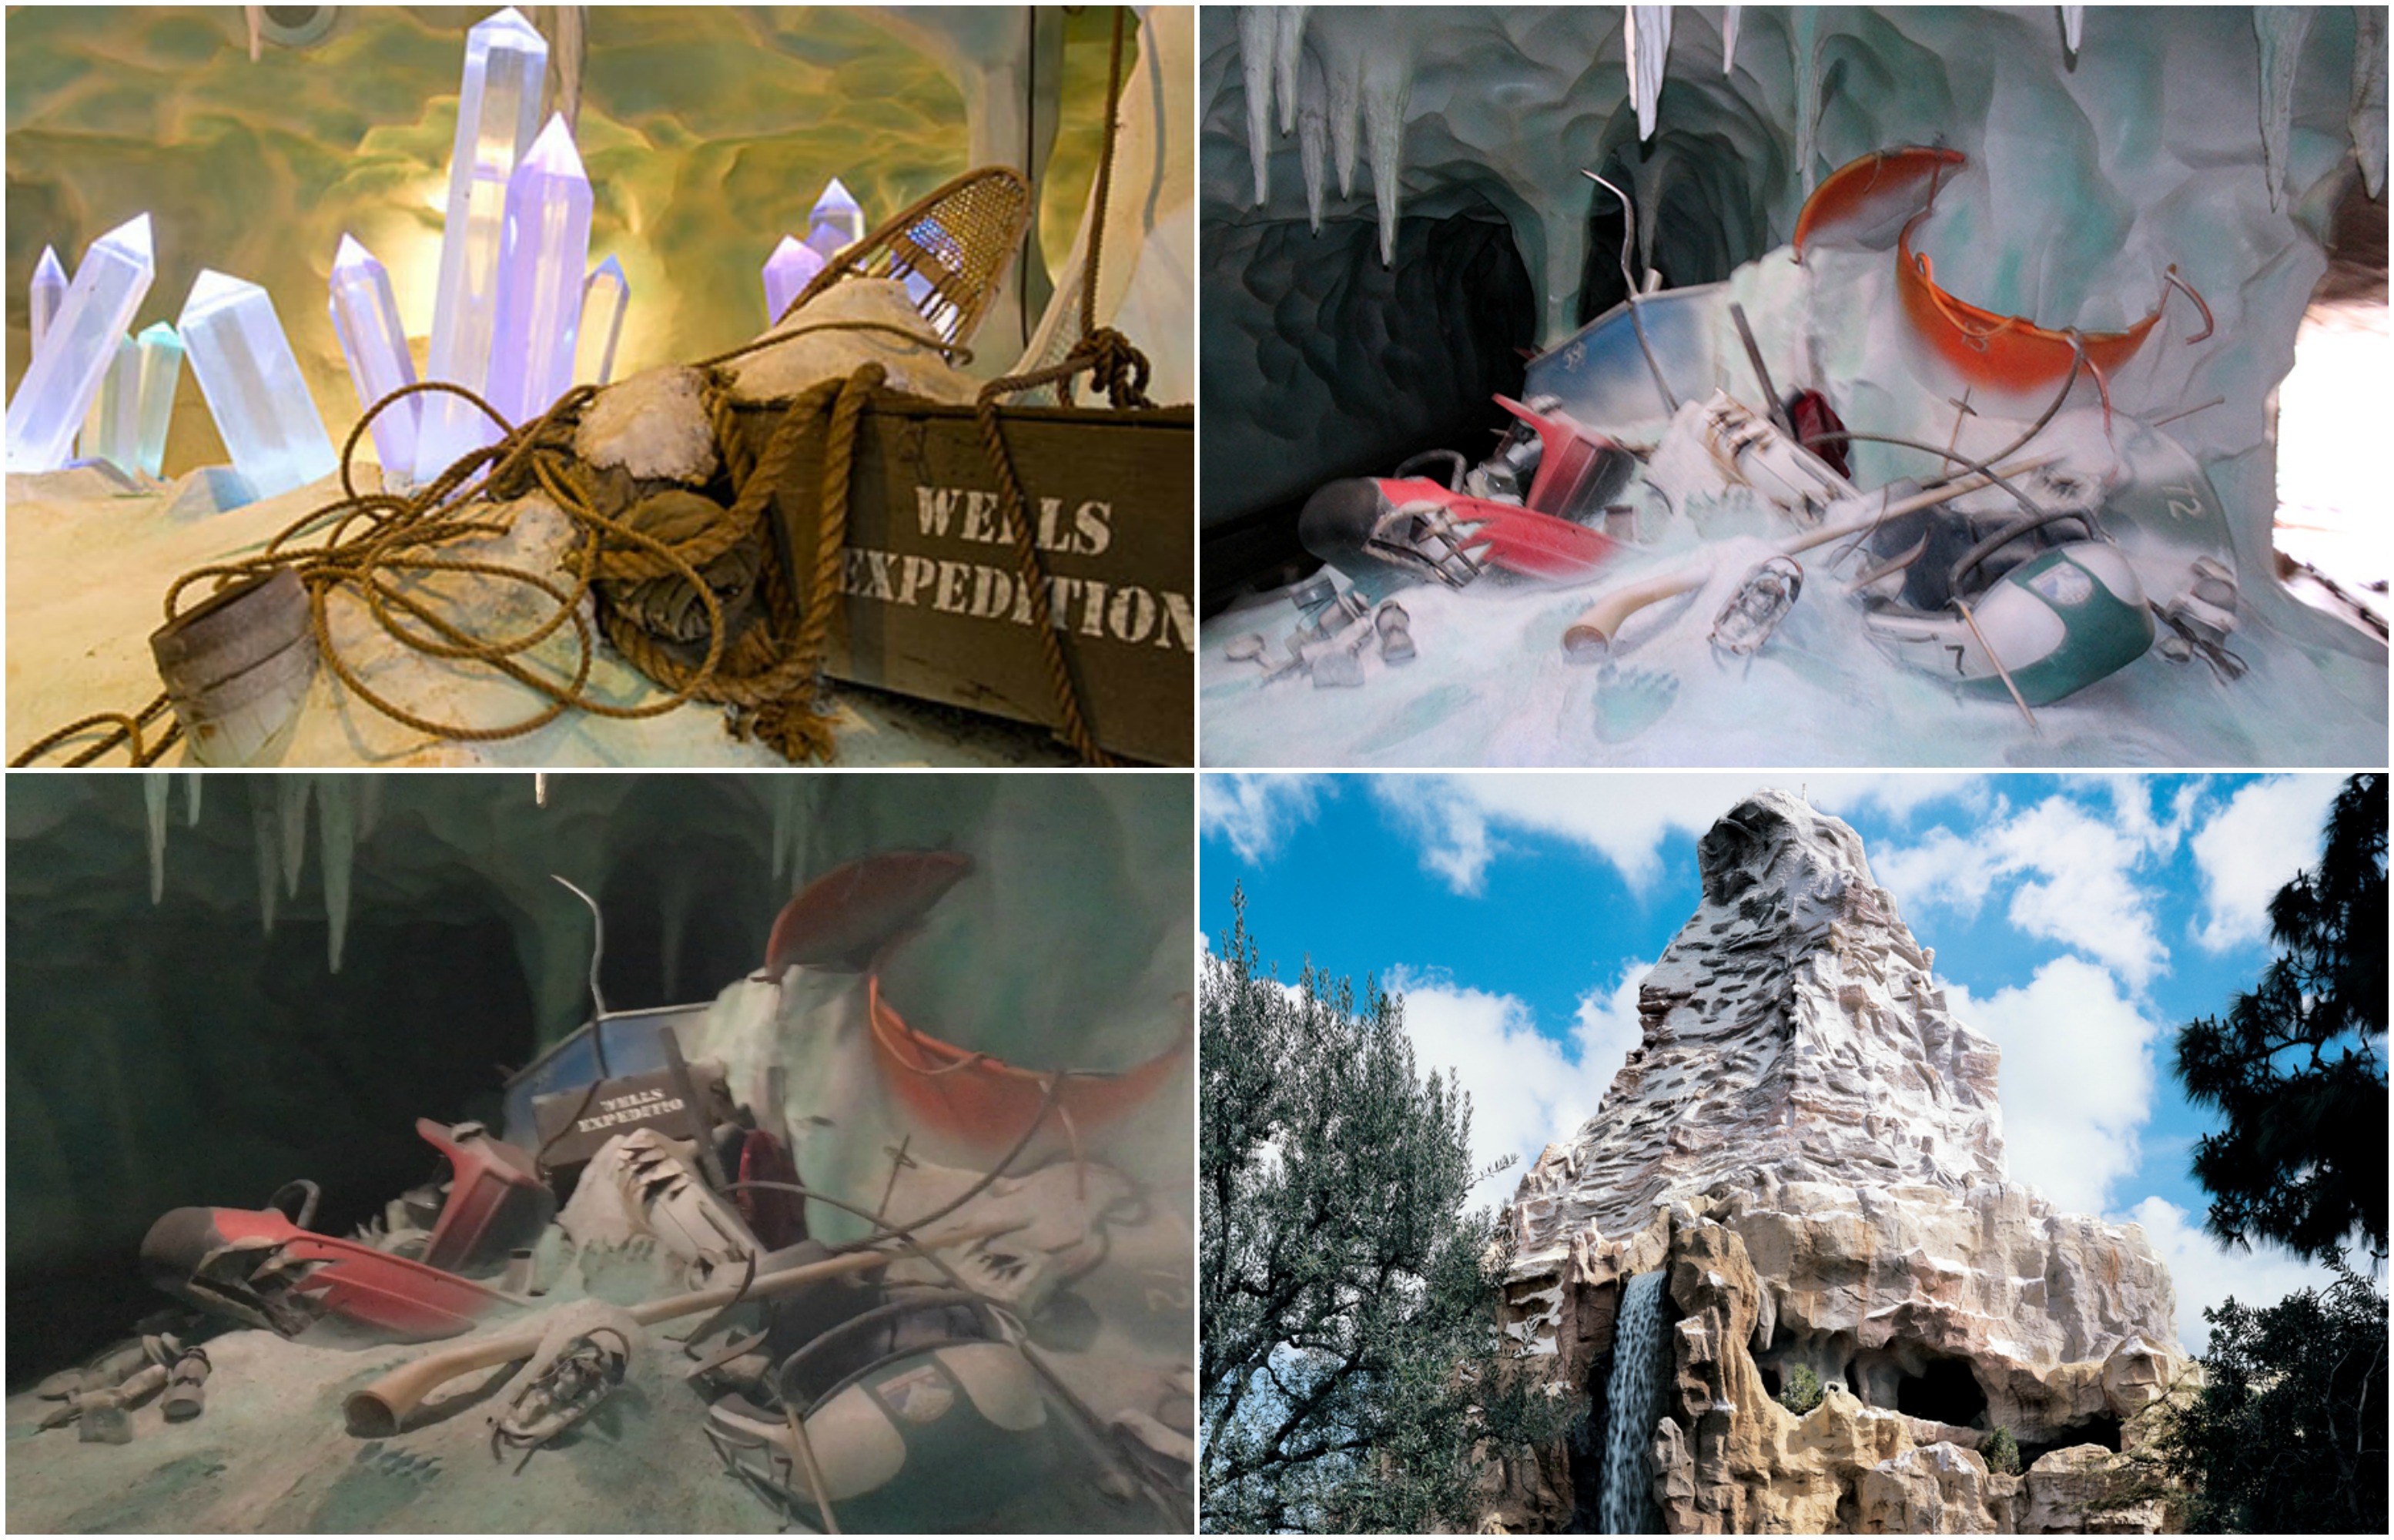 Wells Expedition Tribute Returns to Disneyland's Matterhorn